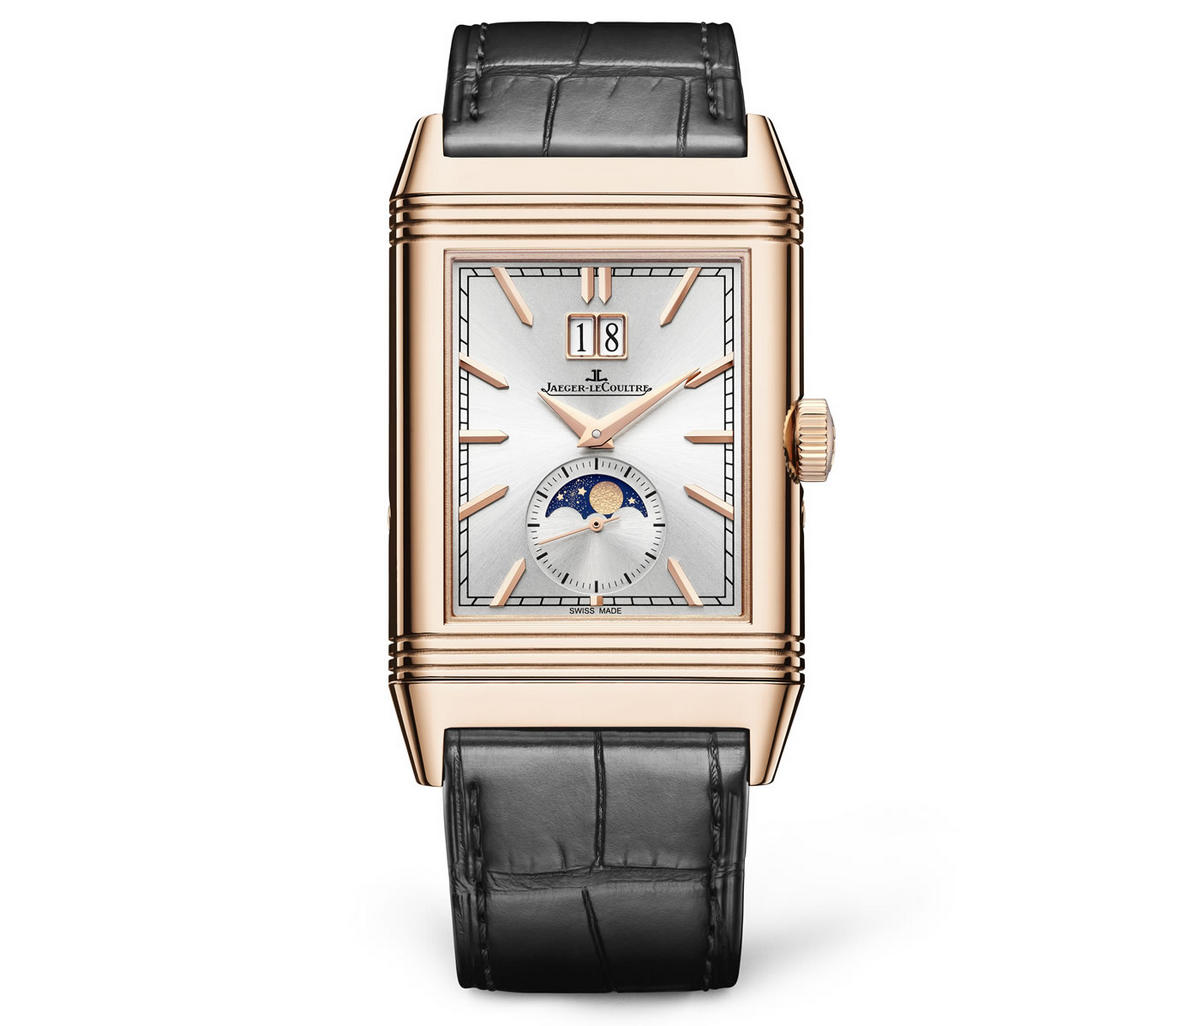 The Jaeger-LeCoultre Reverso Nonantième brings the elegance of the Art Deco era to your wrist